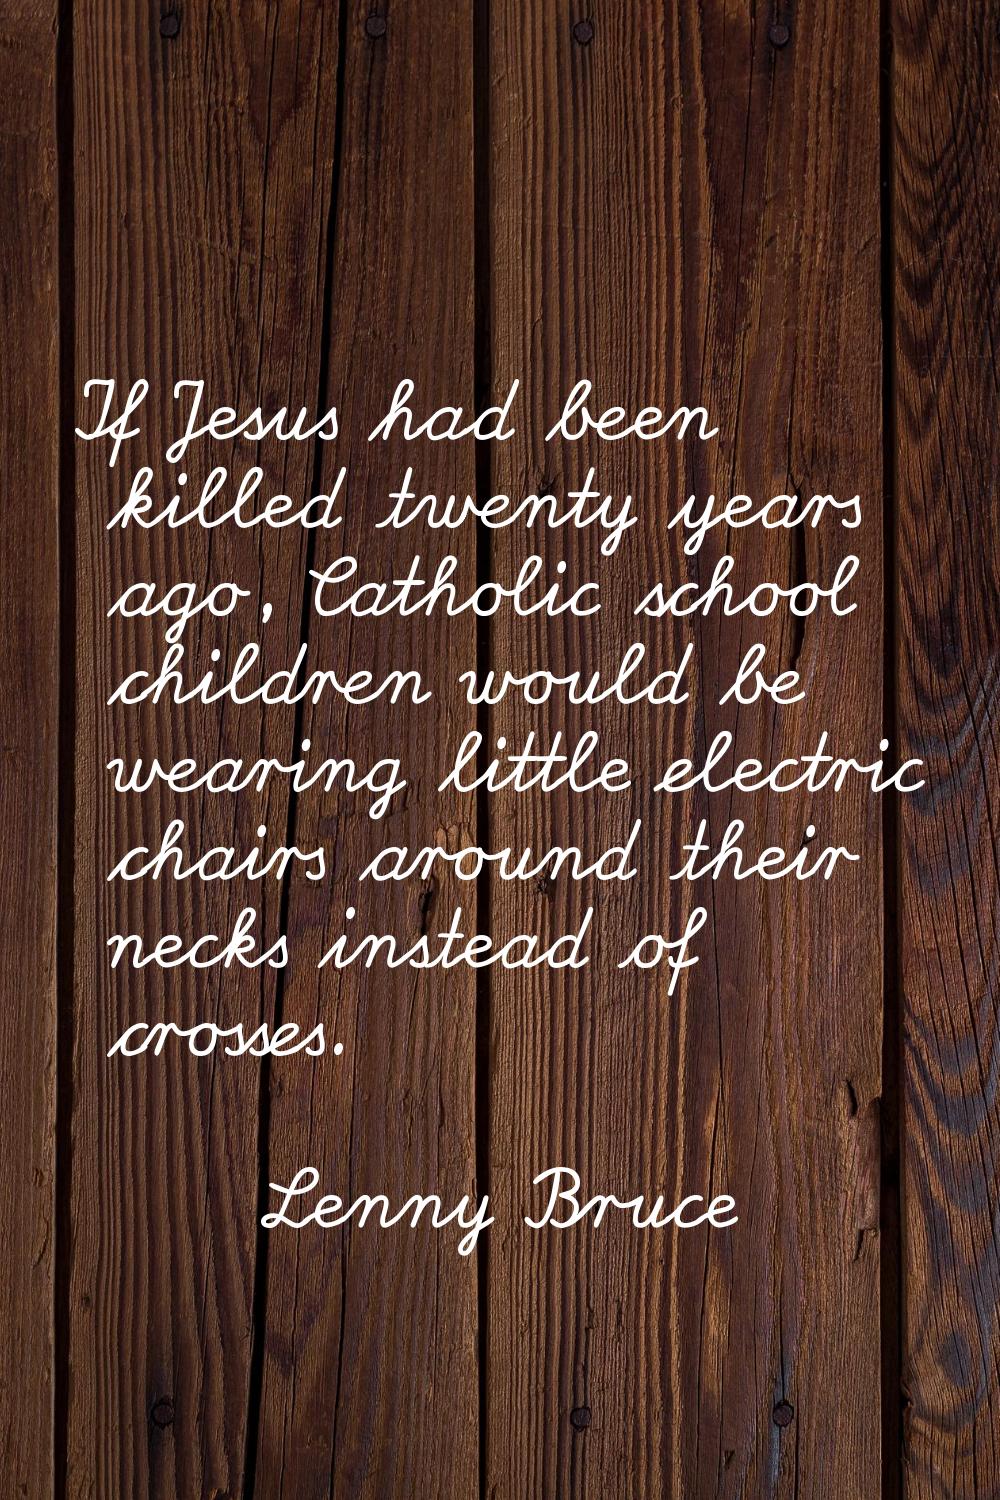 If Jesus had been killed twenty years ago, Catholic school children would be wearing little electri